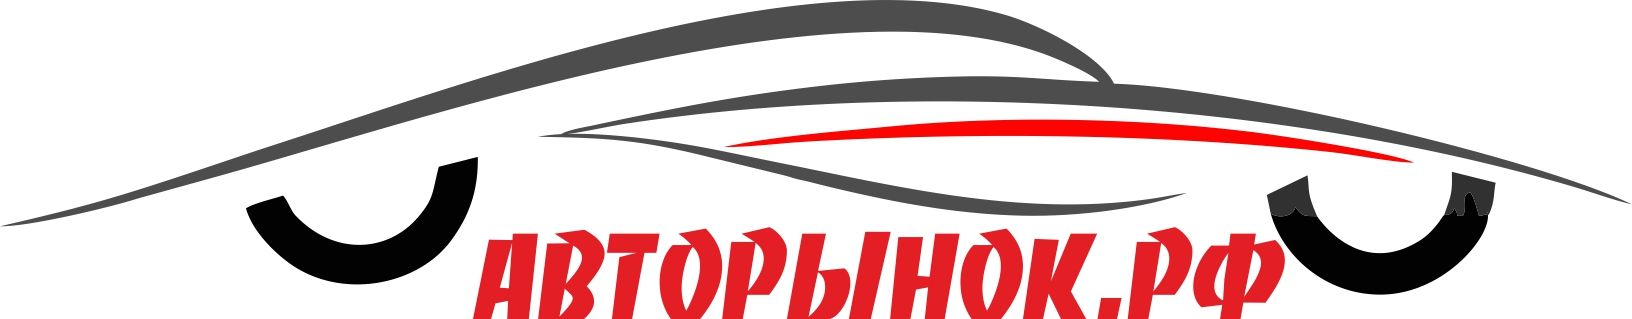 Логотип для сайта Авторынок.рф - дизайнер Niksiy